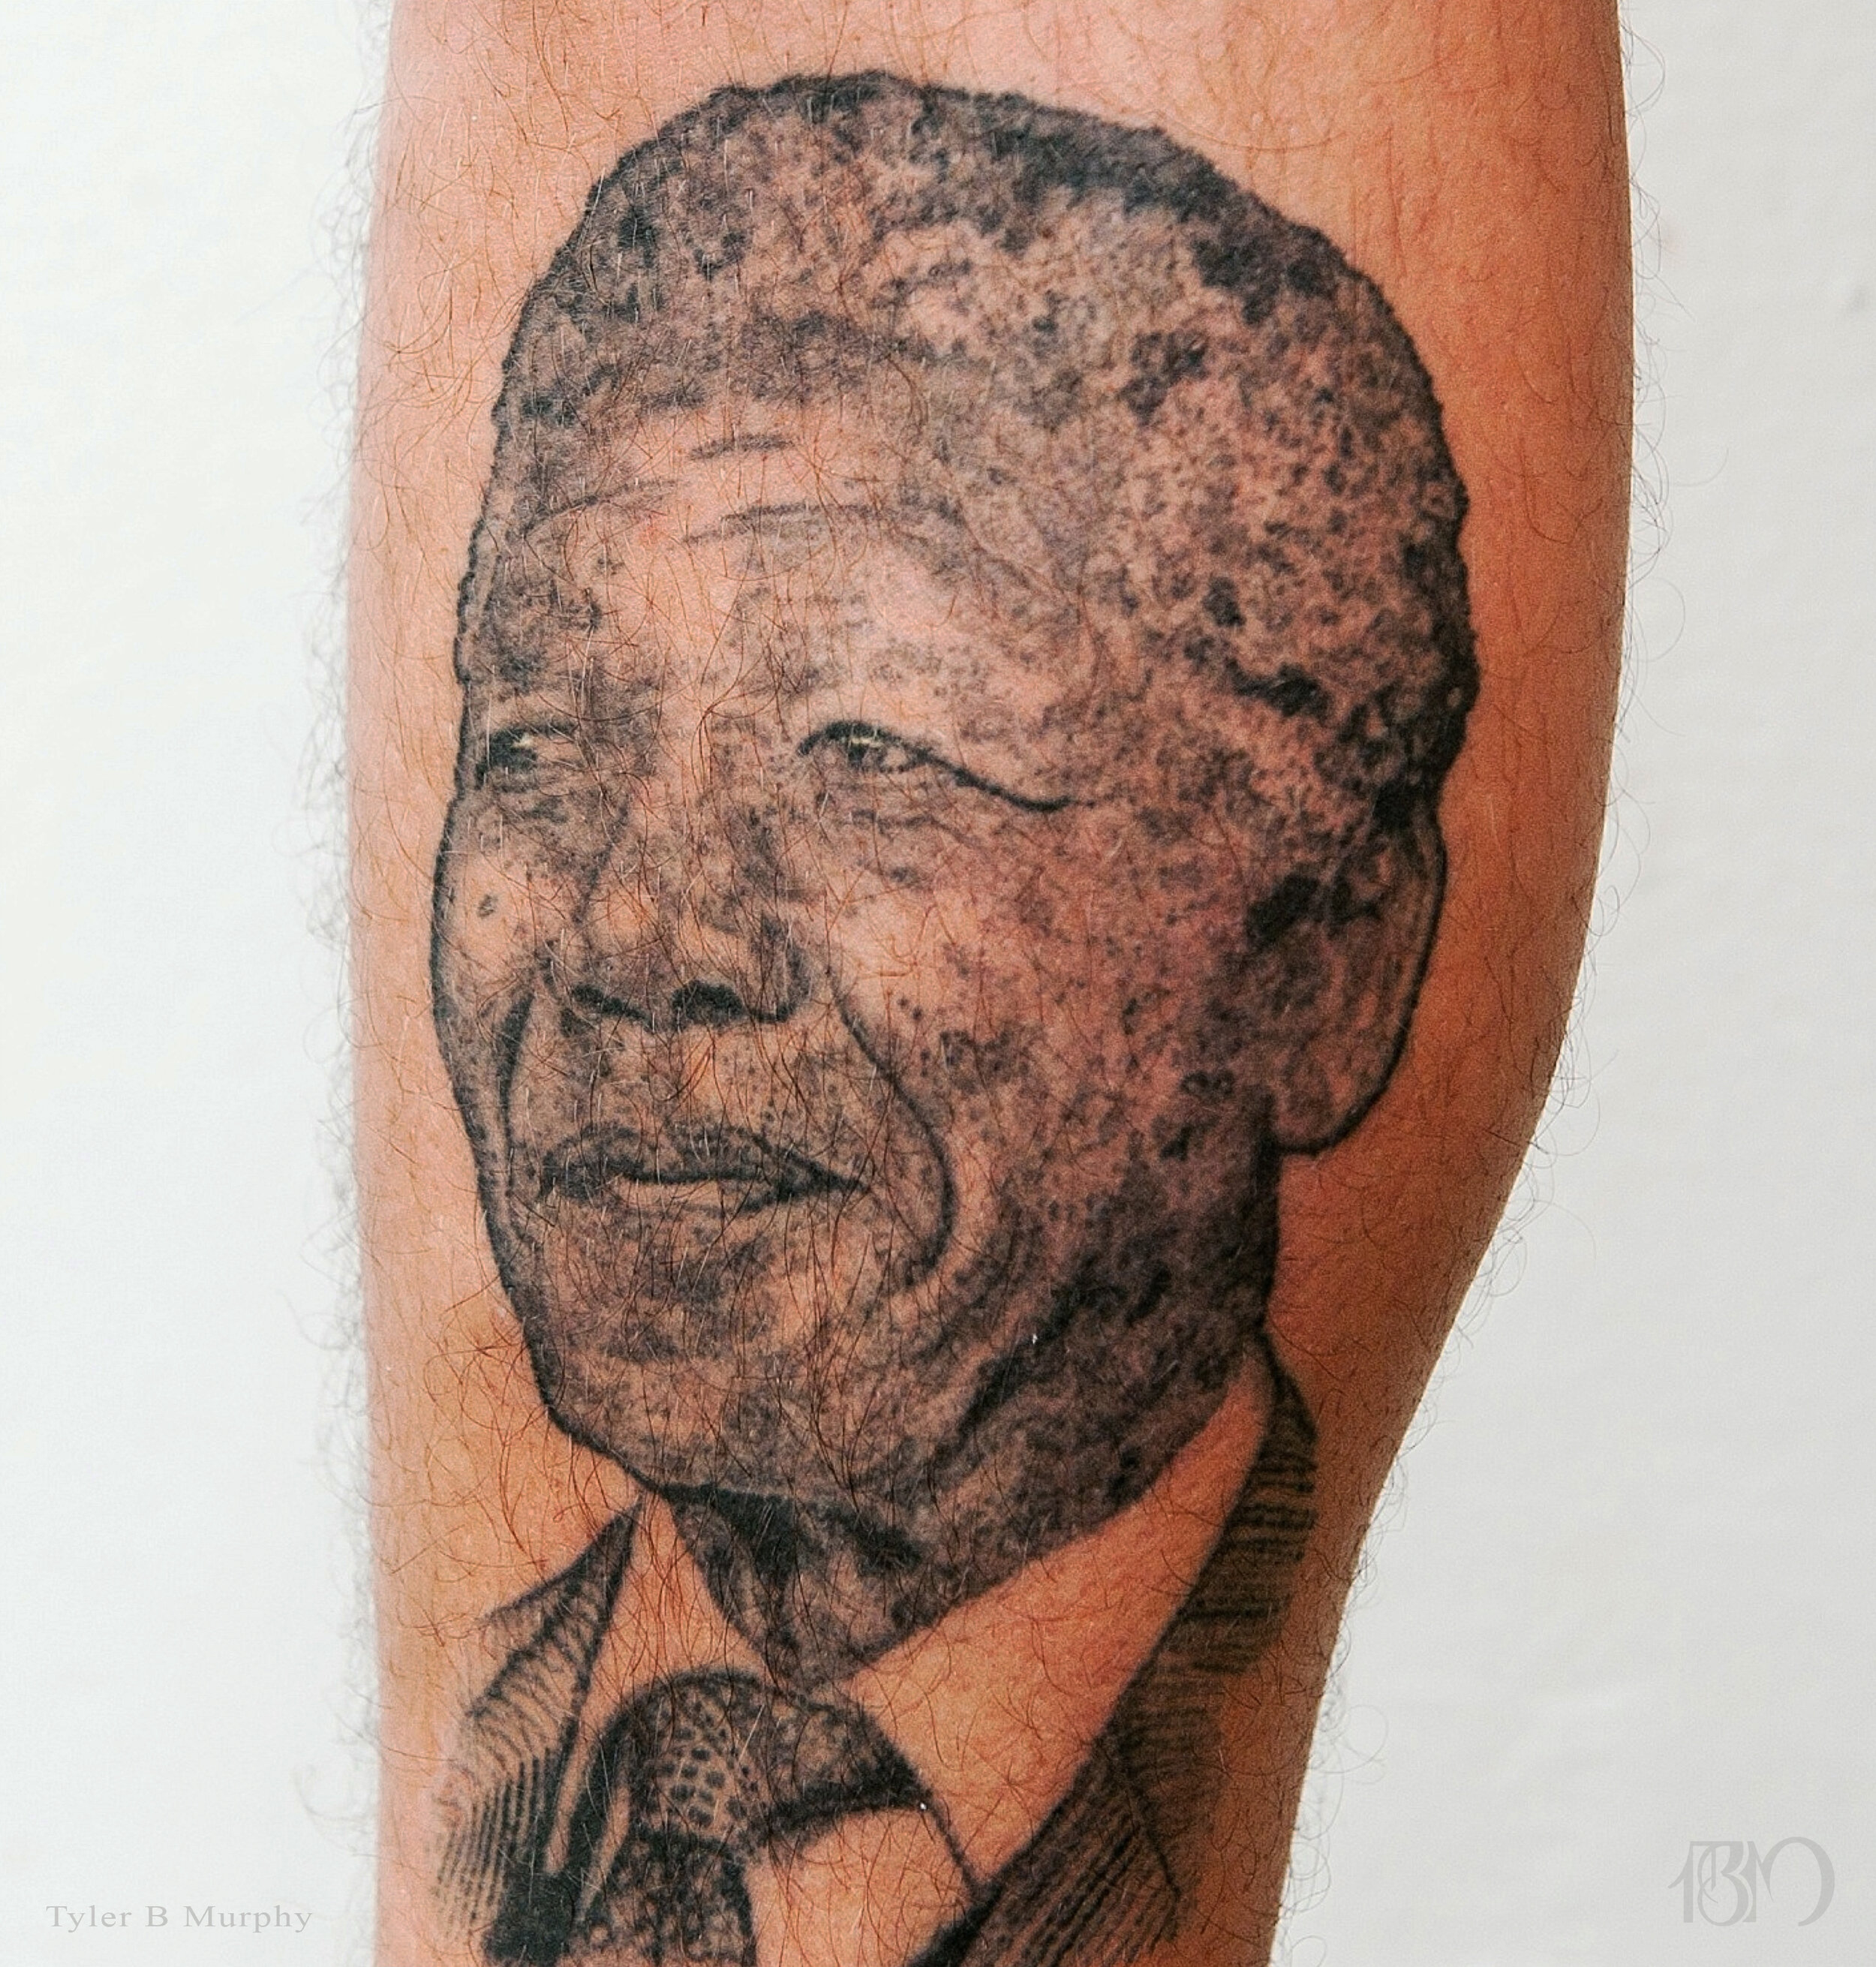 5 - Hand-poked portrait of Nelso Mandela Tyler B Murphy copy.jpg